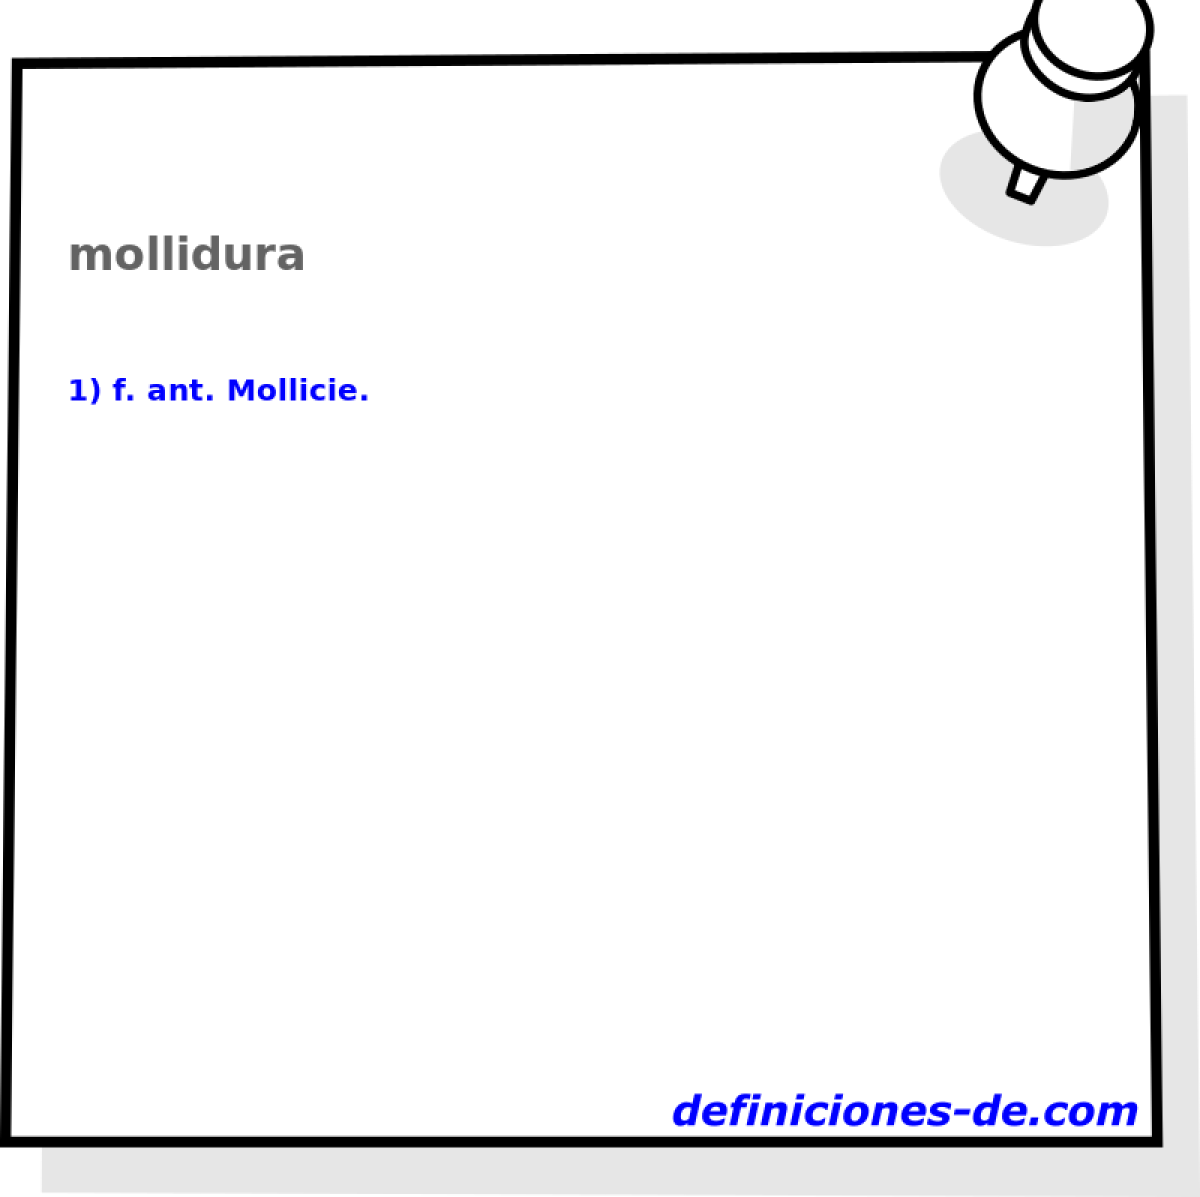 mollidura 